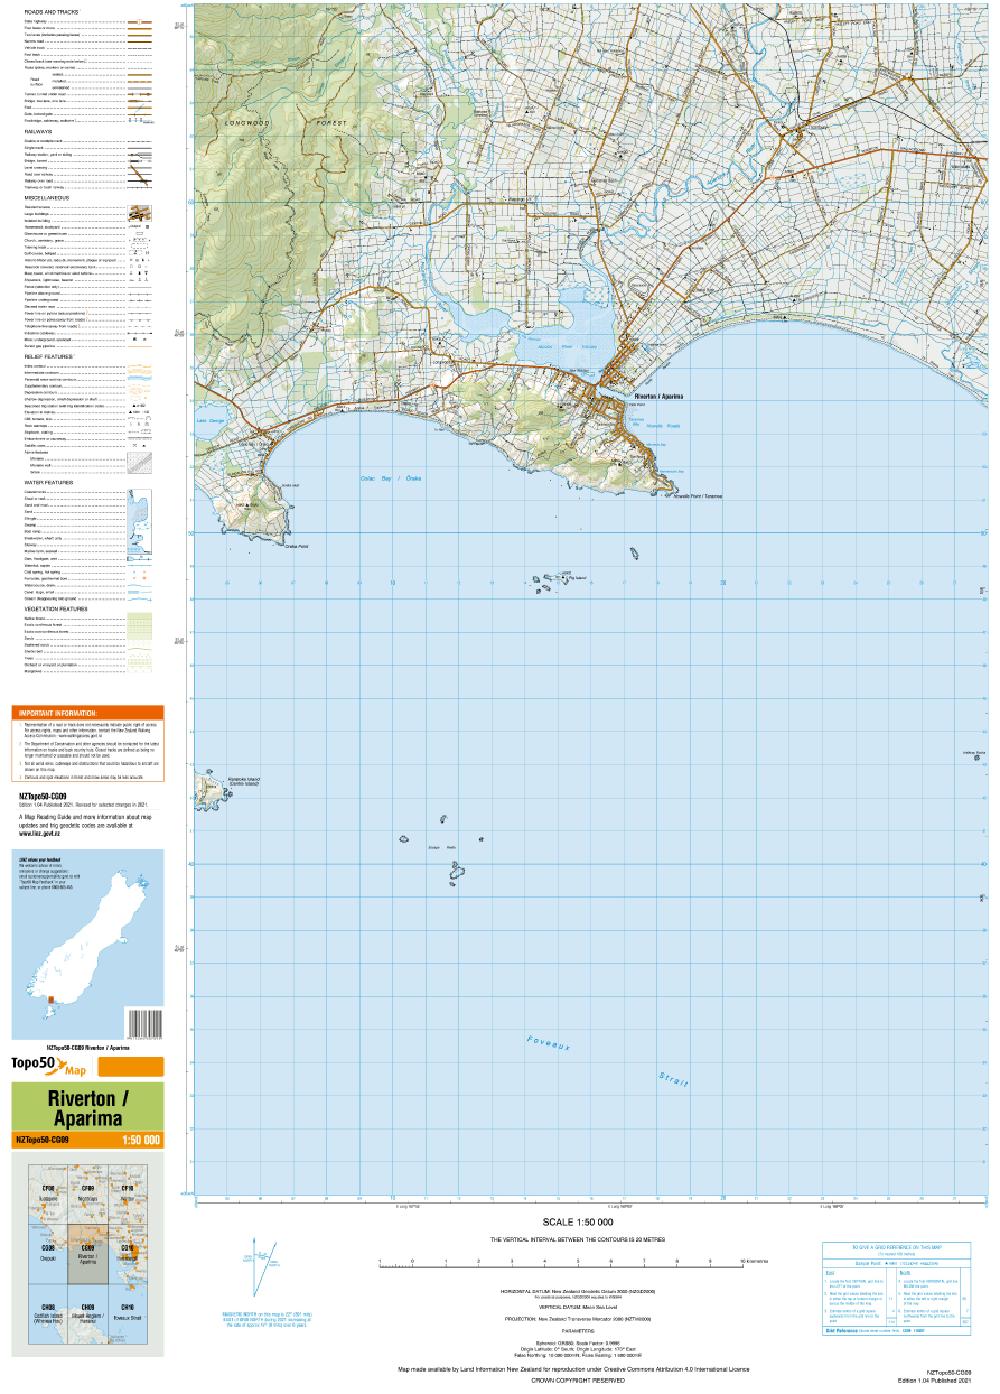 Topo map of Riverton / Aparima